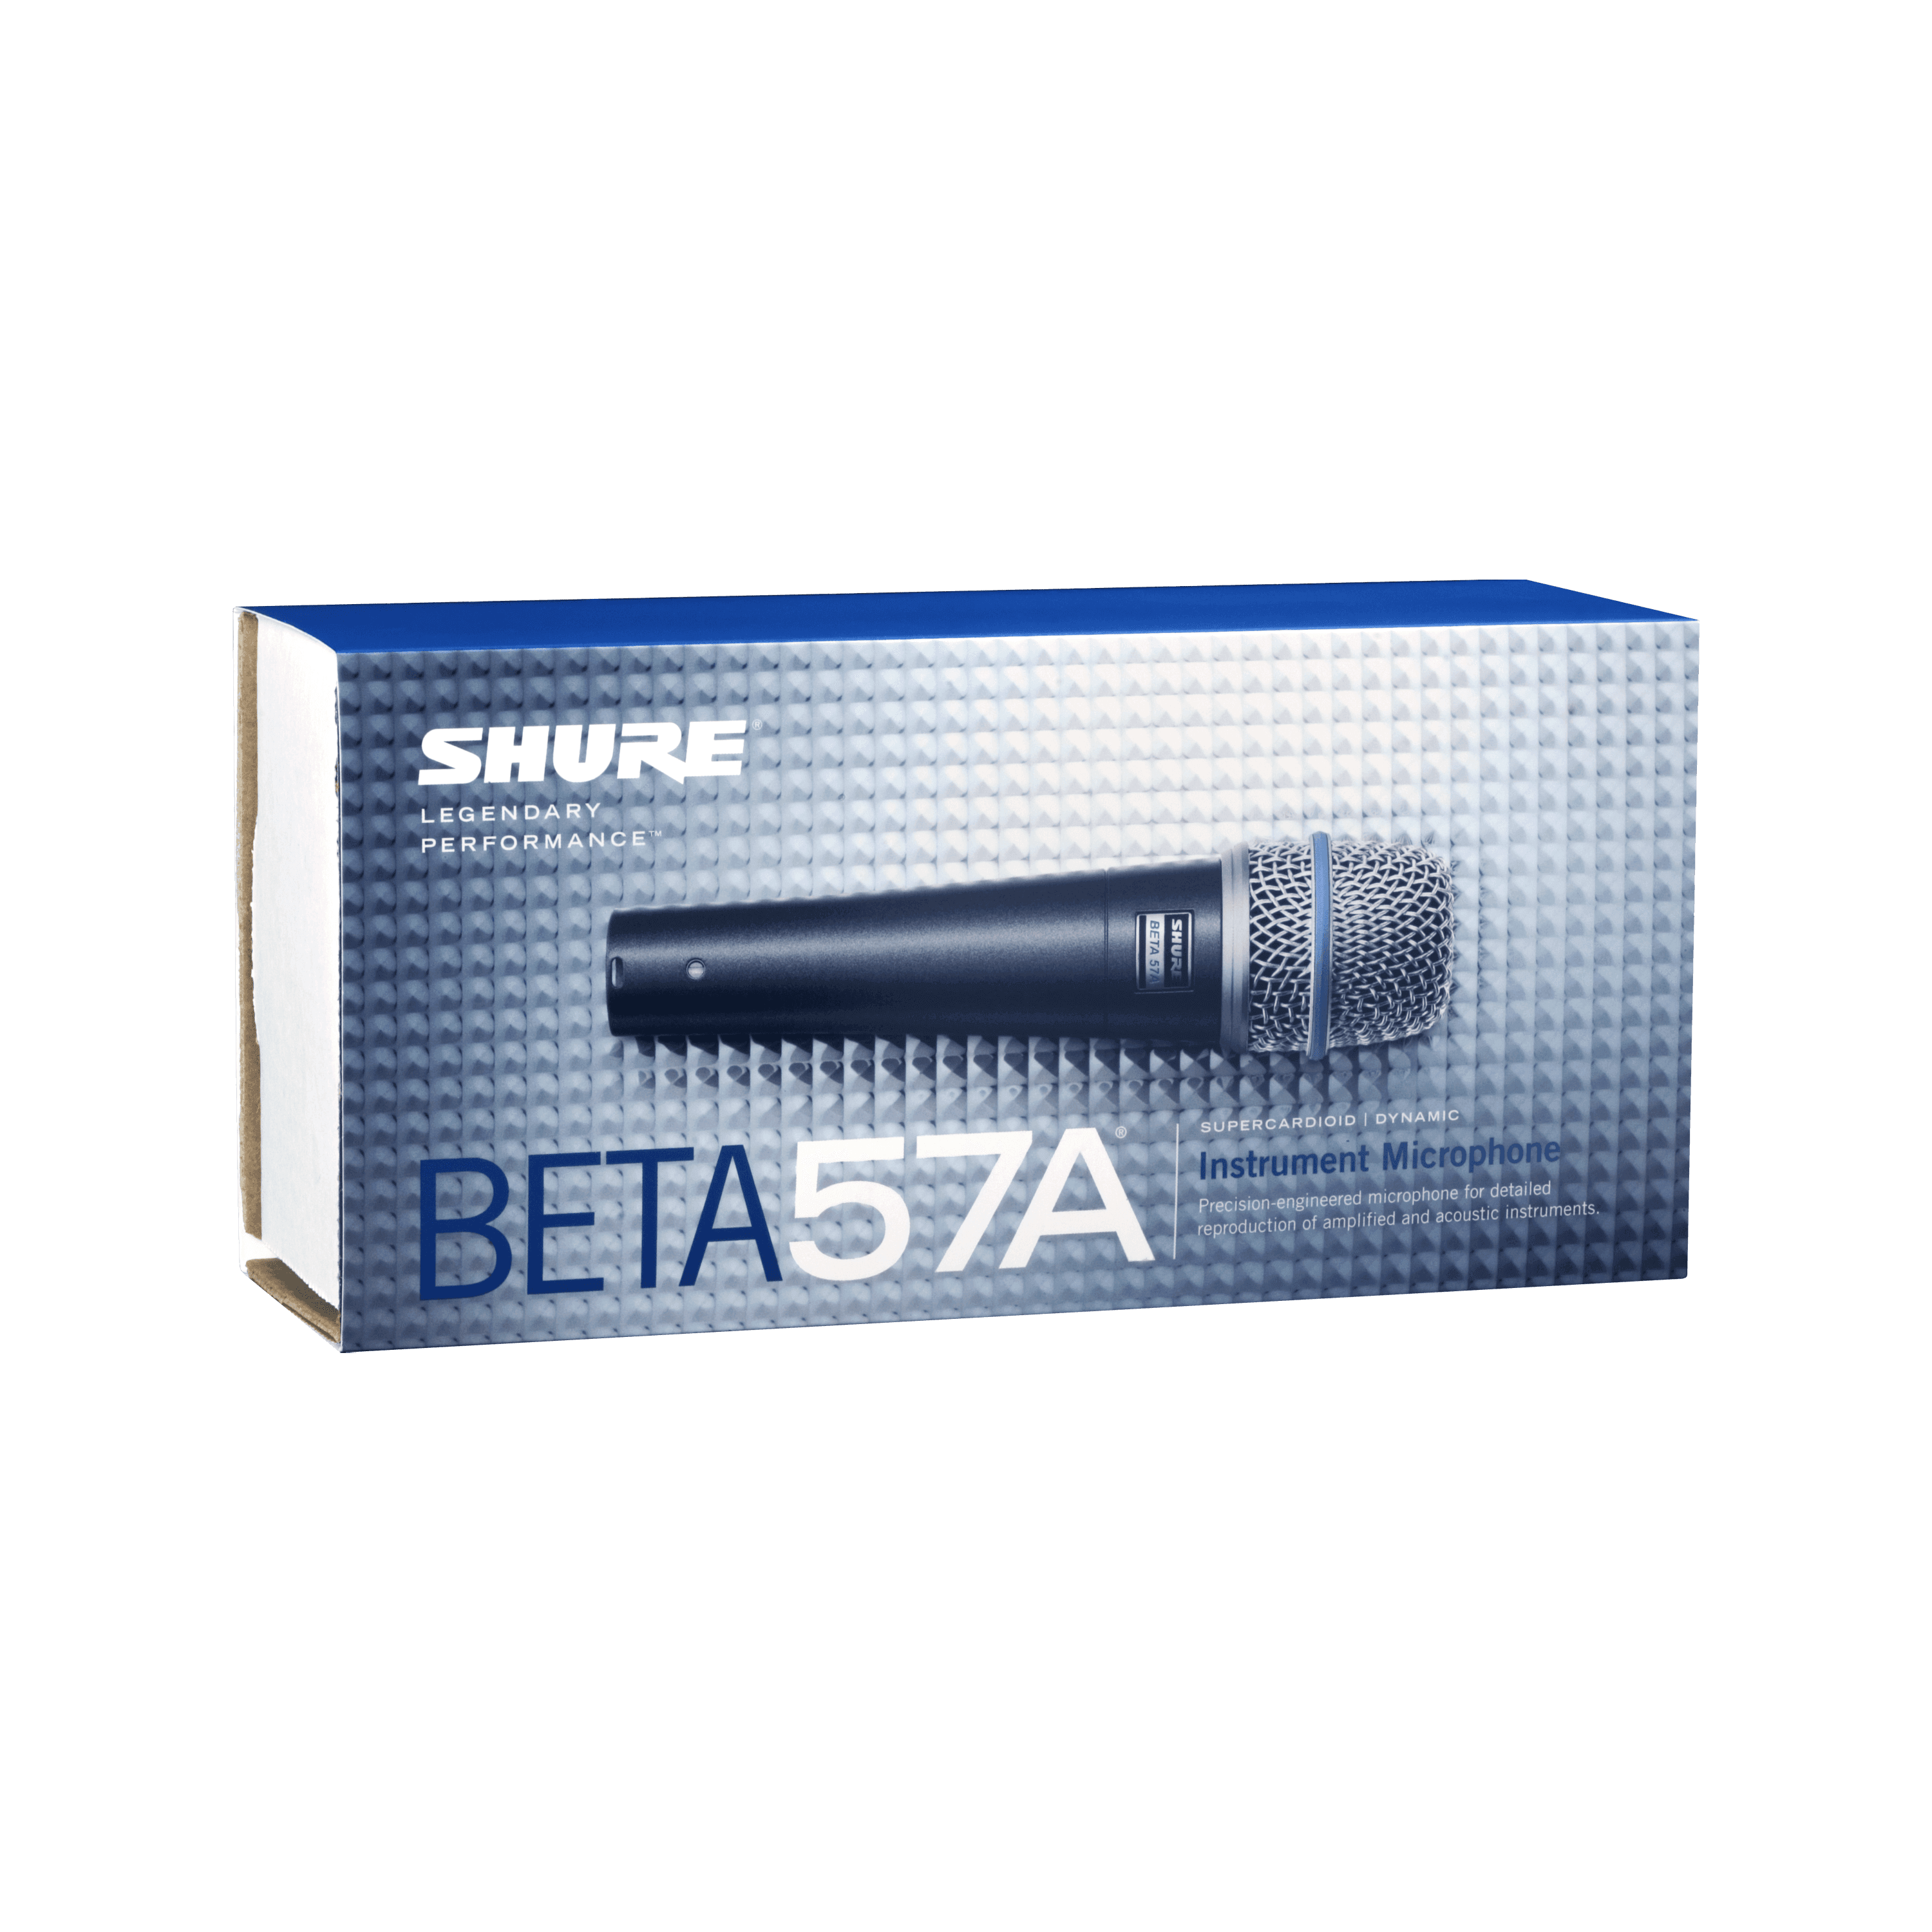 BETA 57A - BETA® 57A 楽器用ダイナミックマイクロホン - Shure 日本